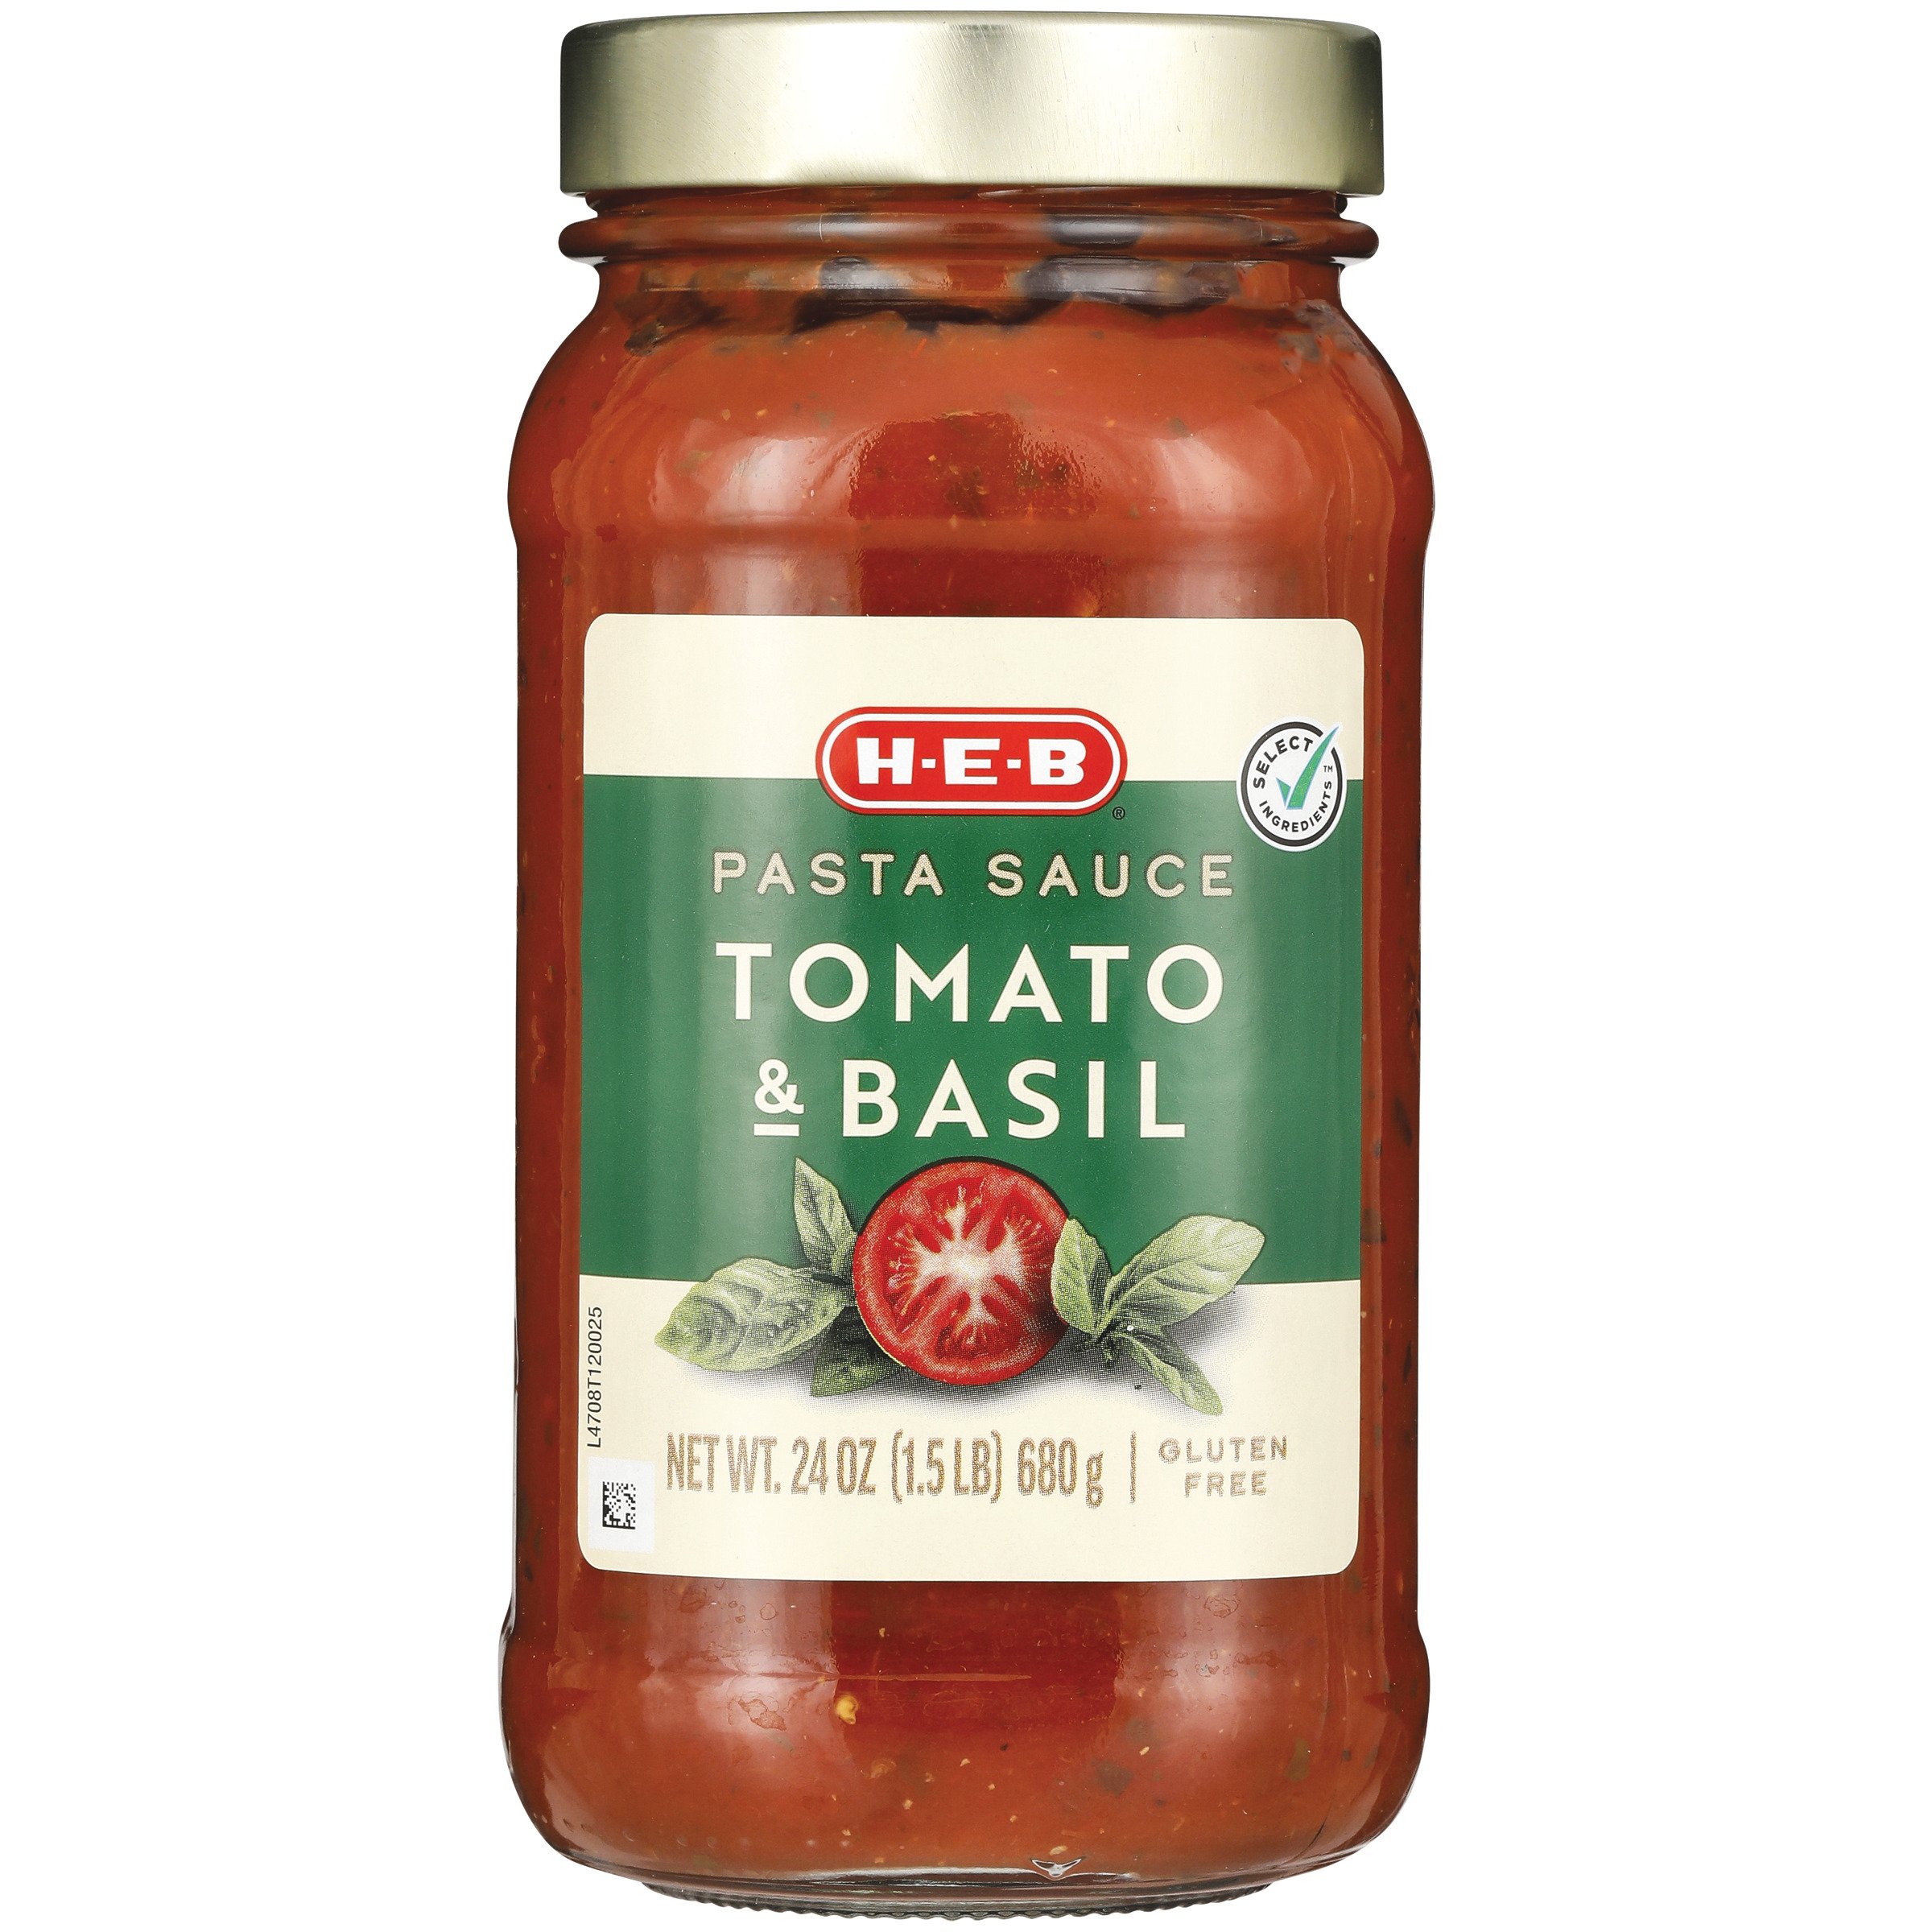 H-E-B Tomato & Basil Pasta Sauce - Shop Pasta Sauces at H-E-B